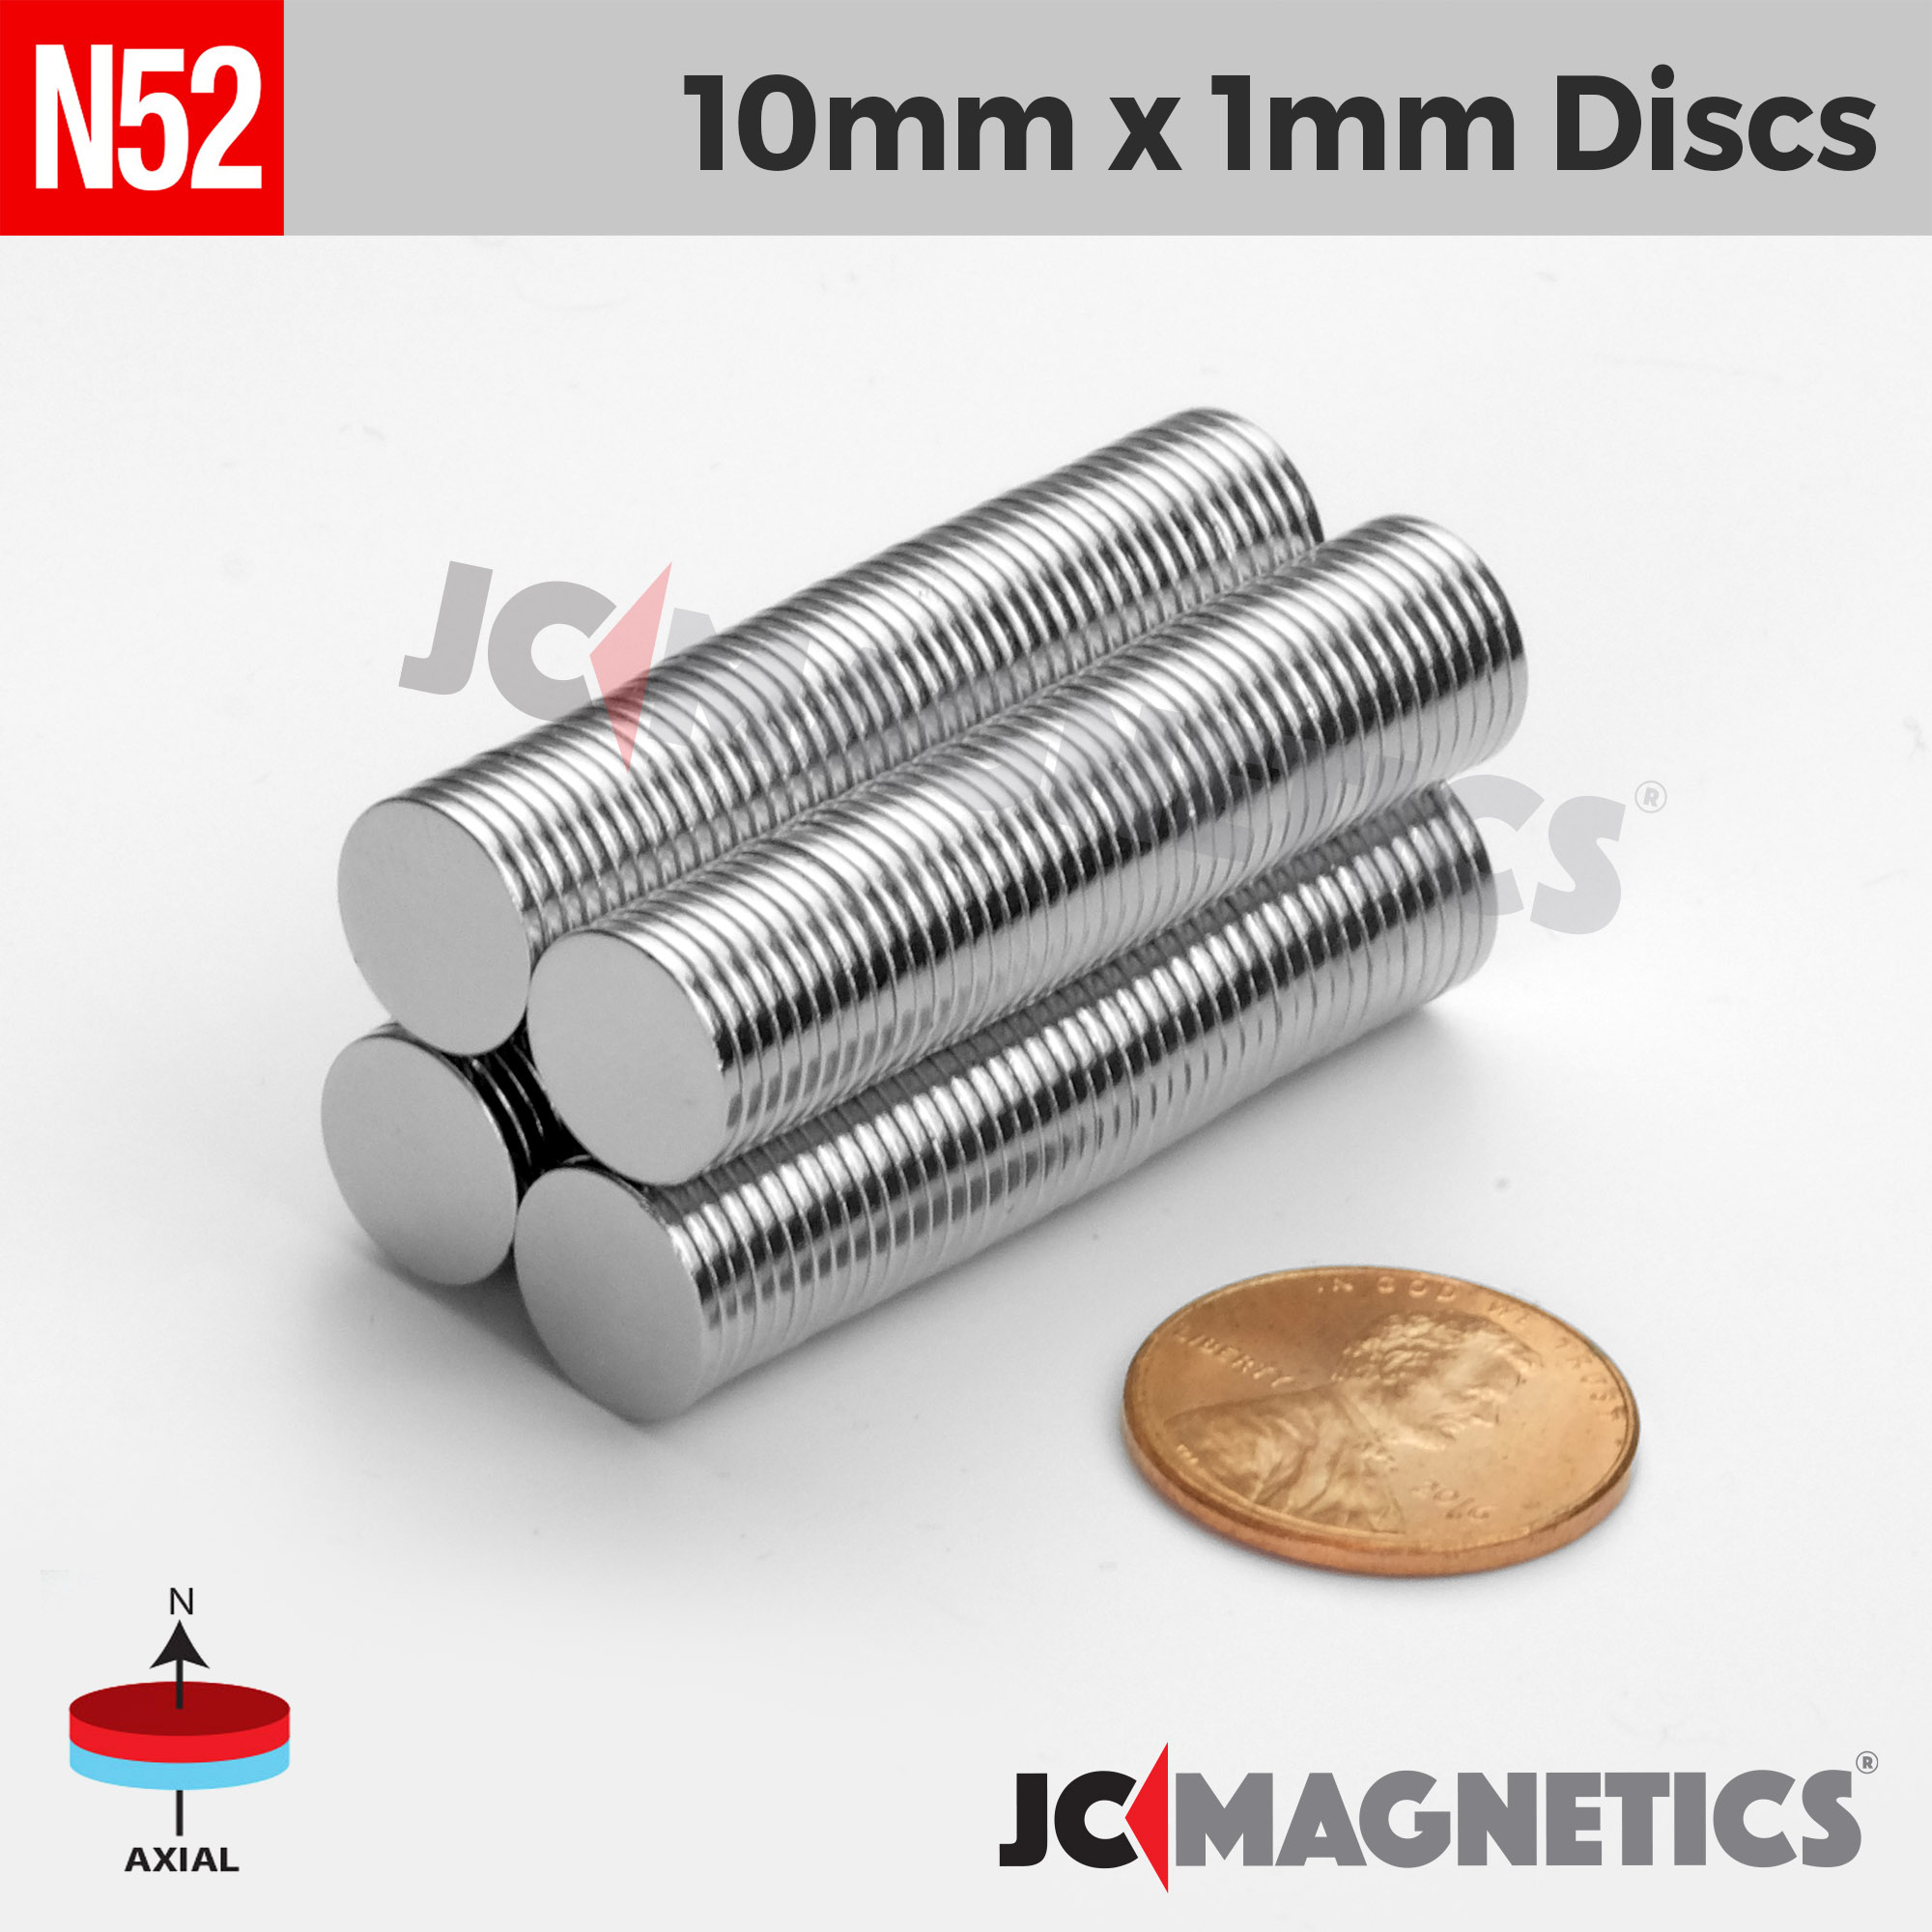 https://jc-magnetics.com/image/cache/catalog/magnets/10x1mm-discs-N52-2000x2000.jpg